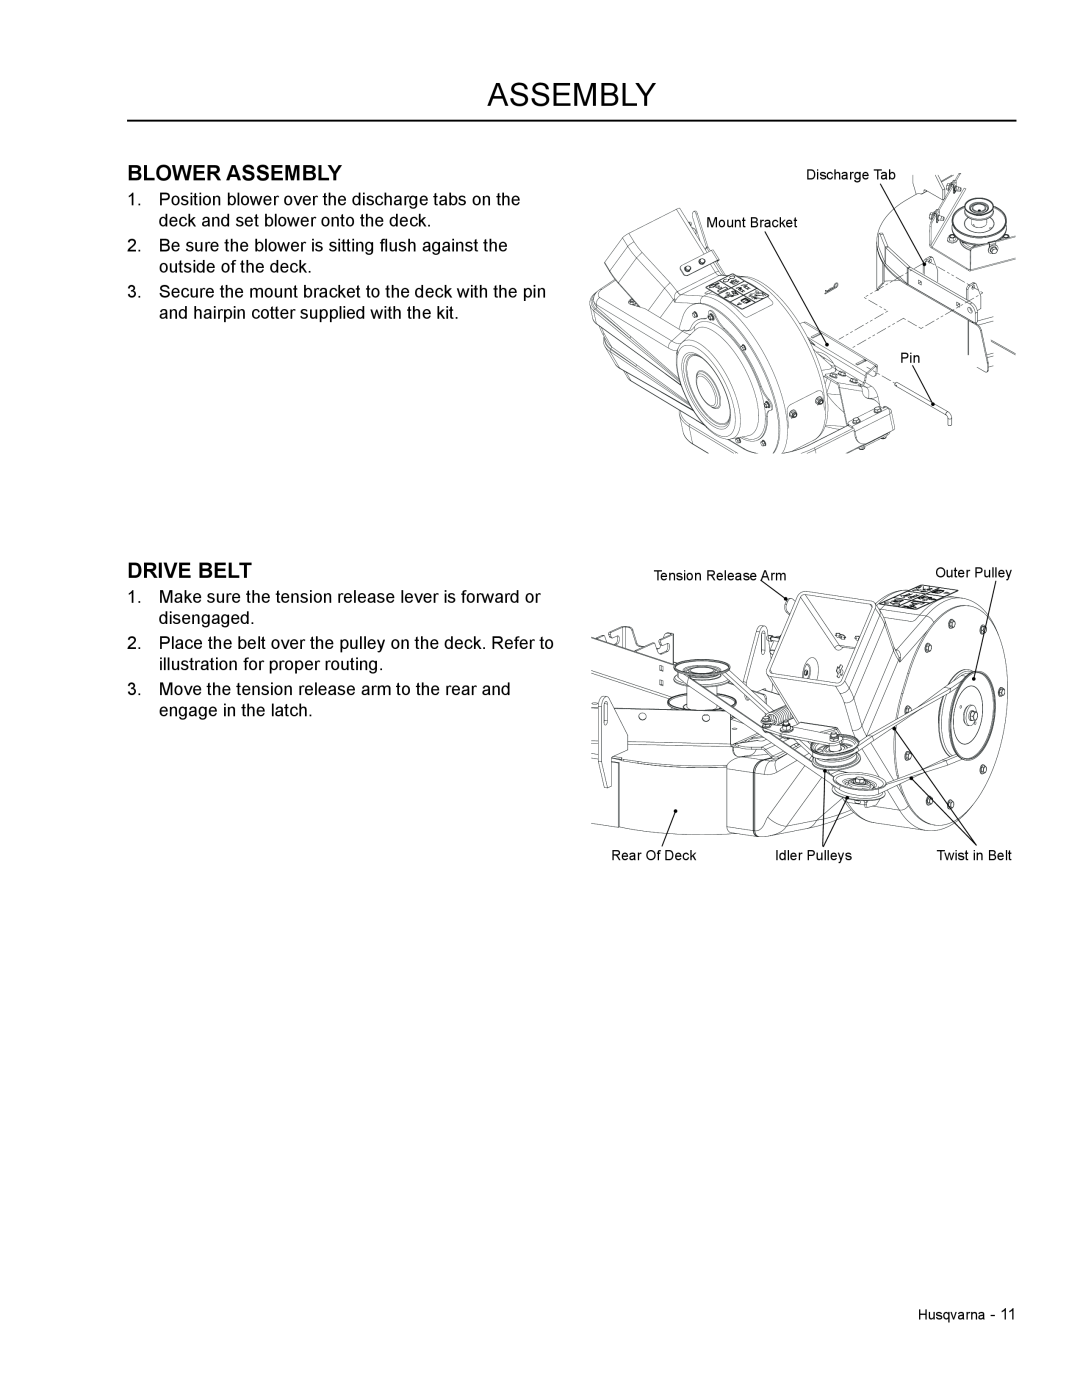 Dixon 966 004901 manual Blower Assembly, Drive Belt 